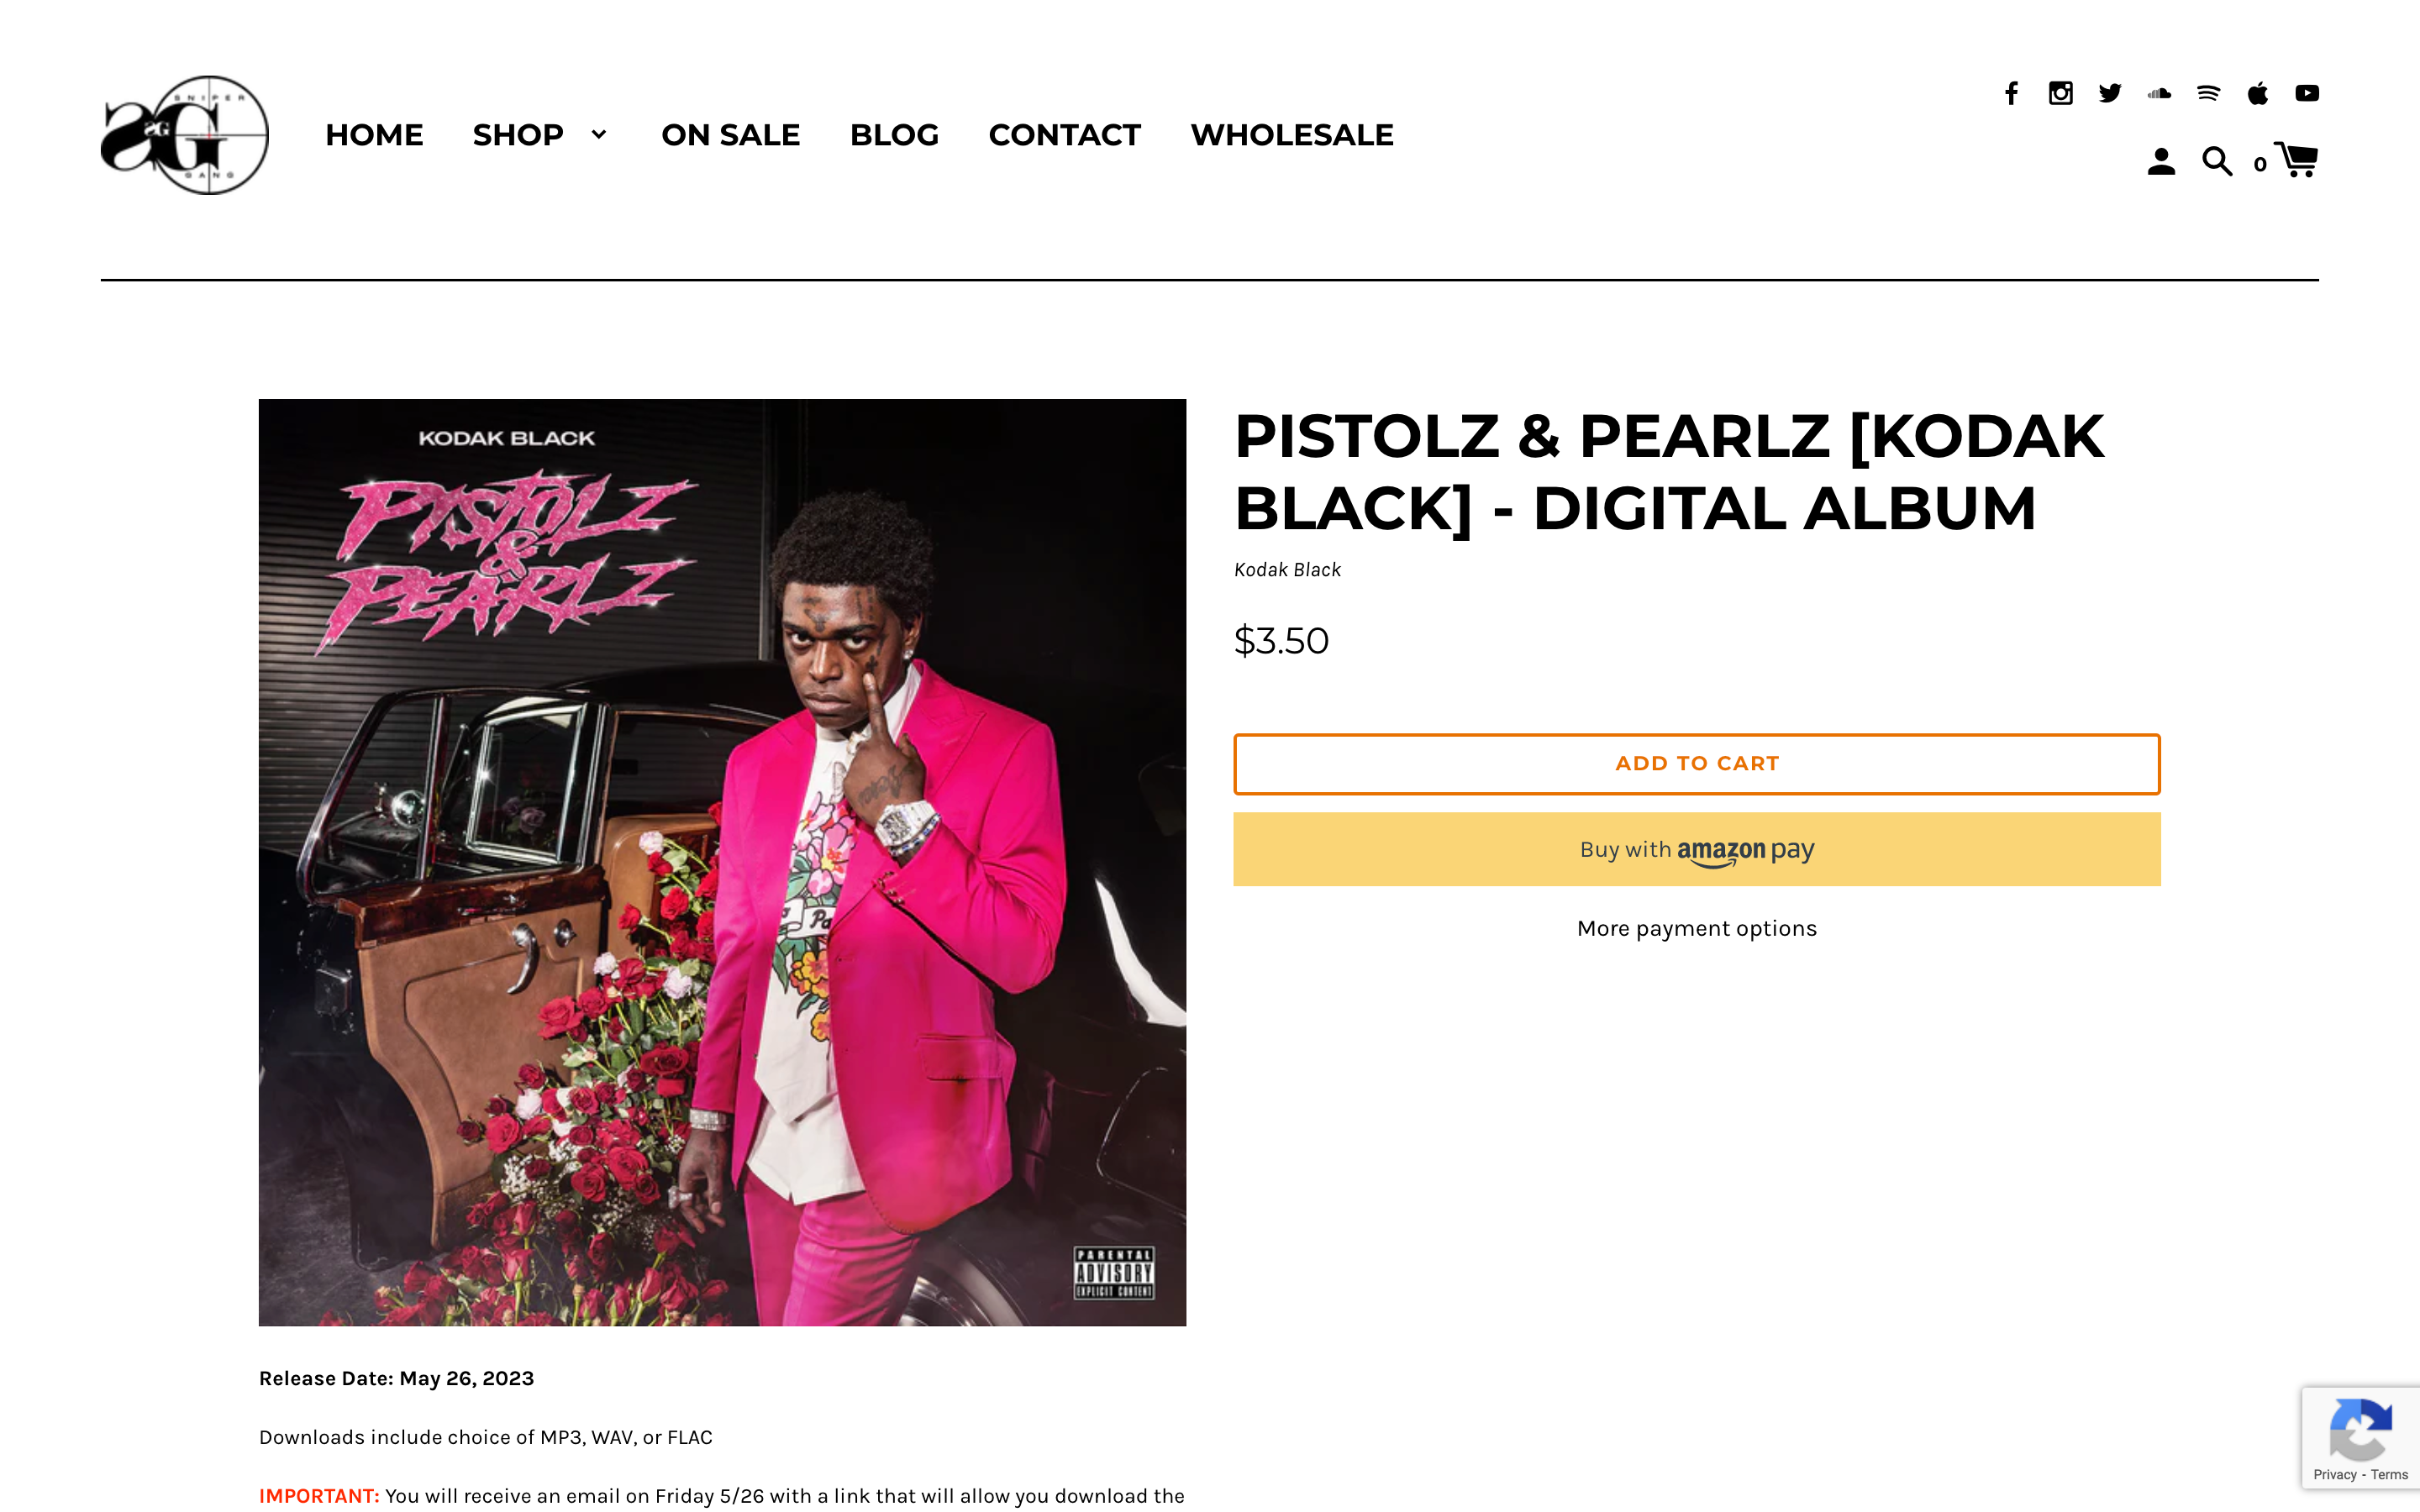 Kodak Black Releases New Album 'Kutthroat Bill: Vol. 1